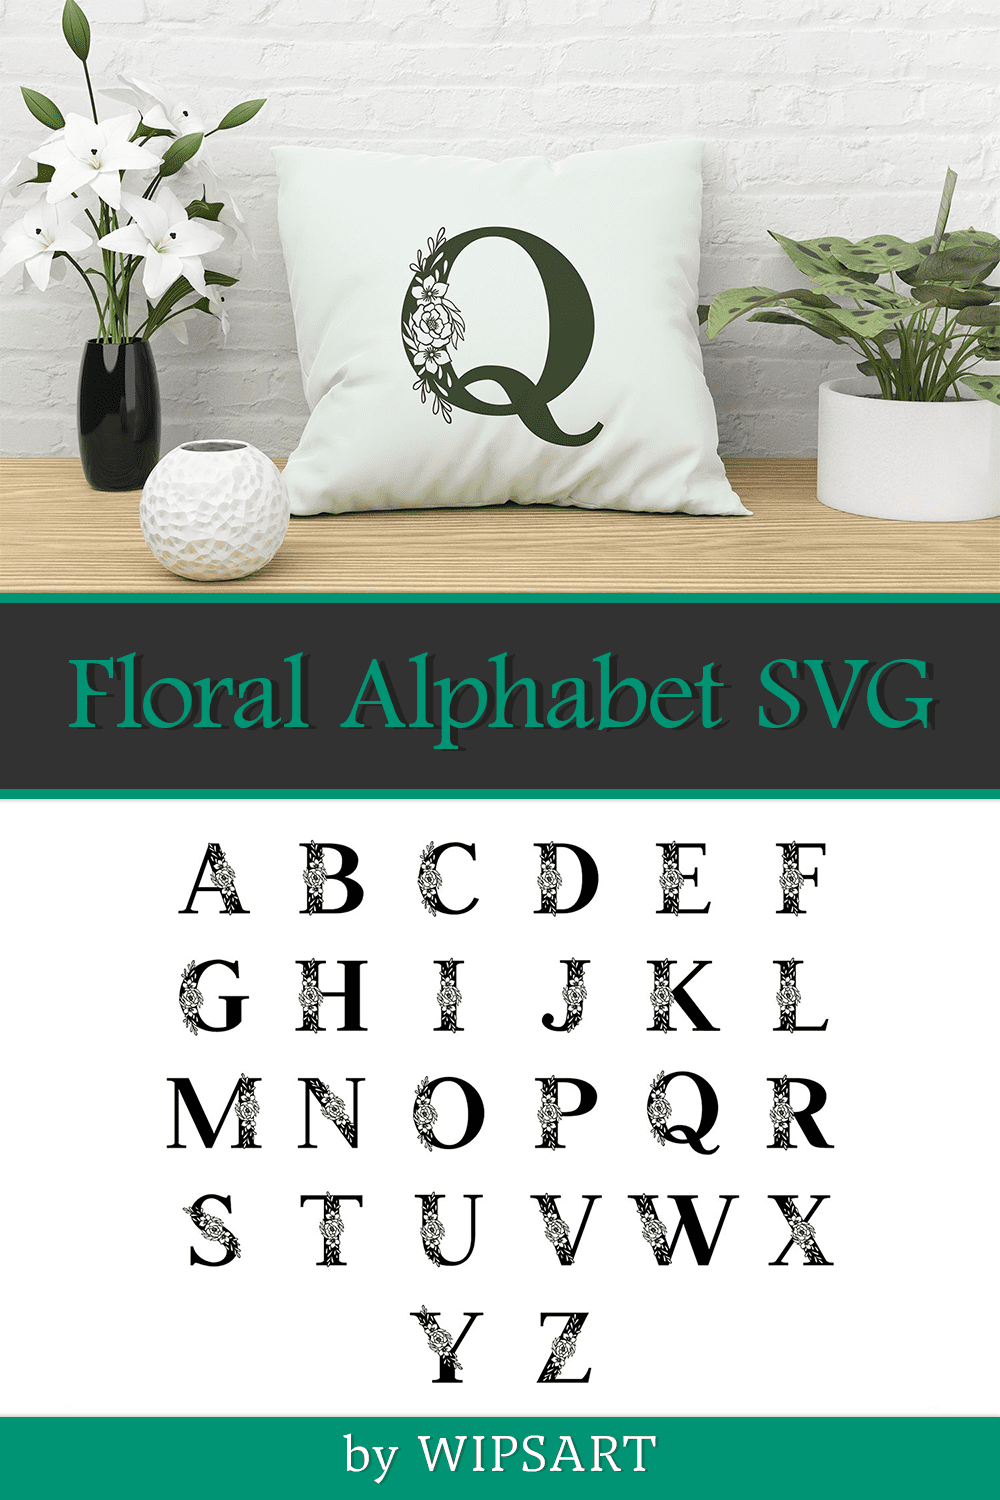 floral alphabet svg pinterest